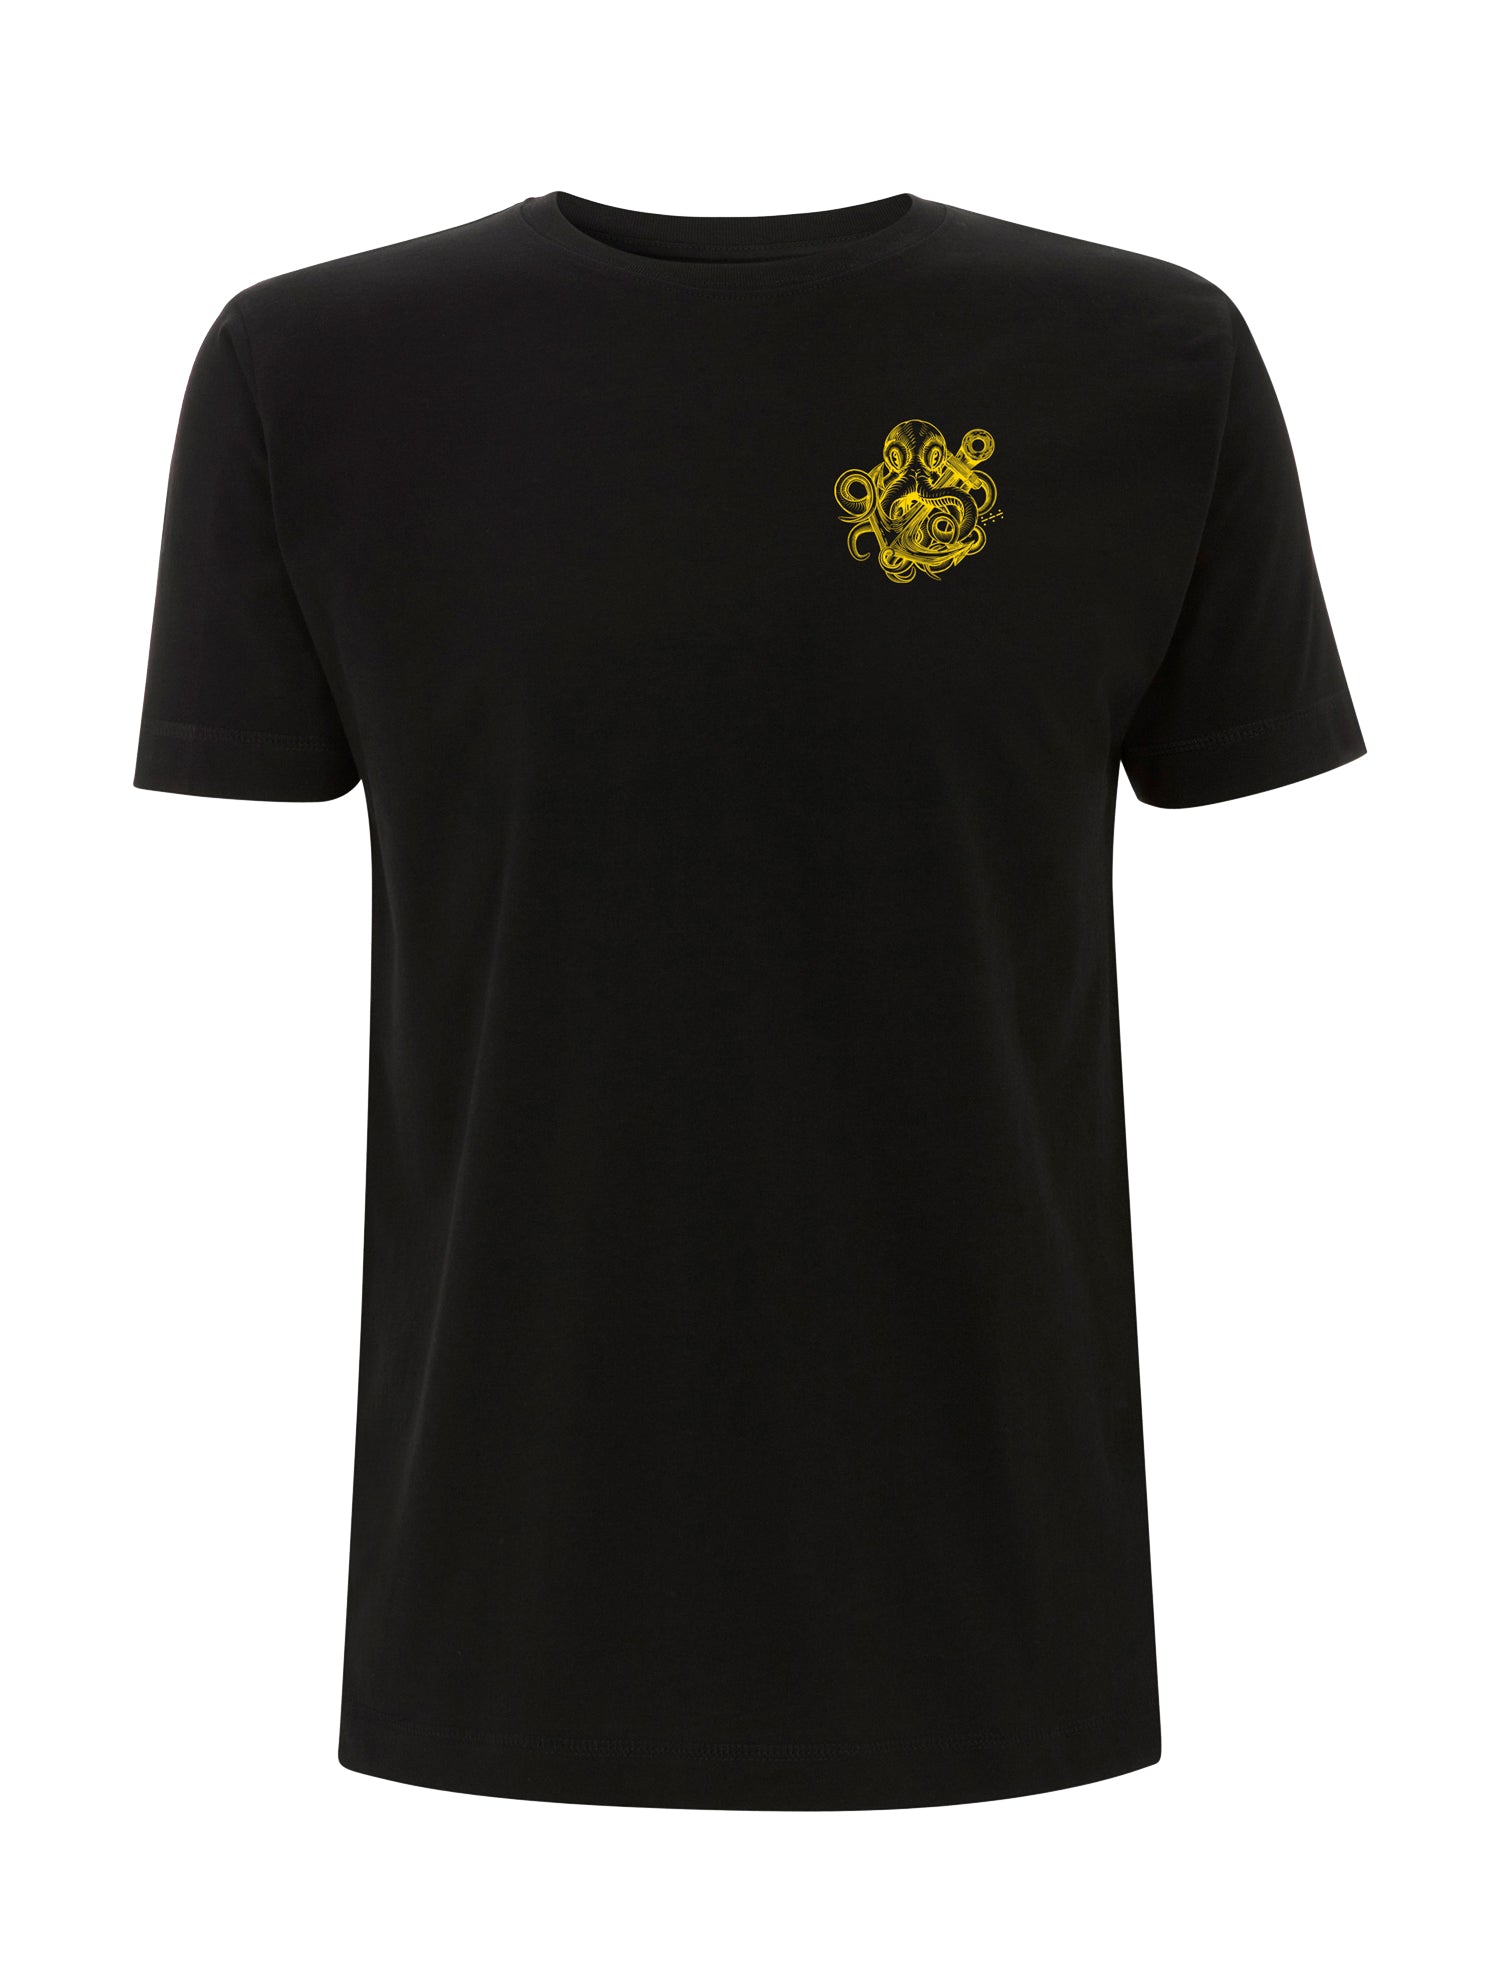 Gold Kraken T-Shirt - Save Our Souls Clothing